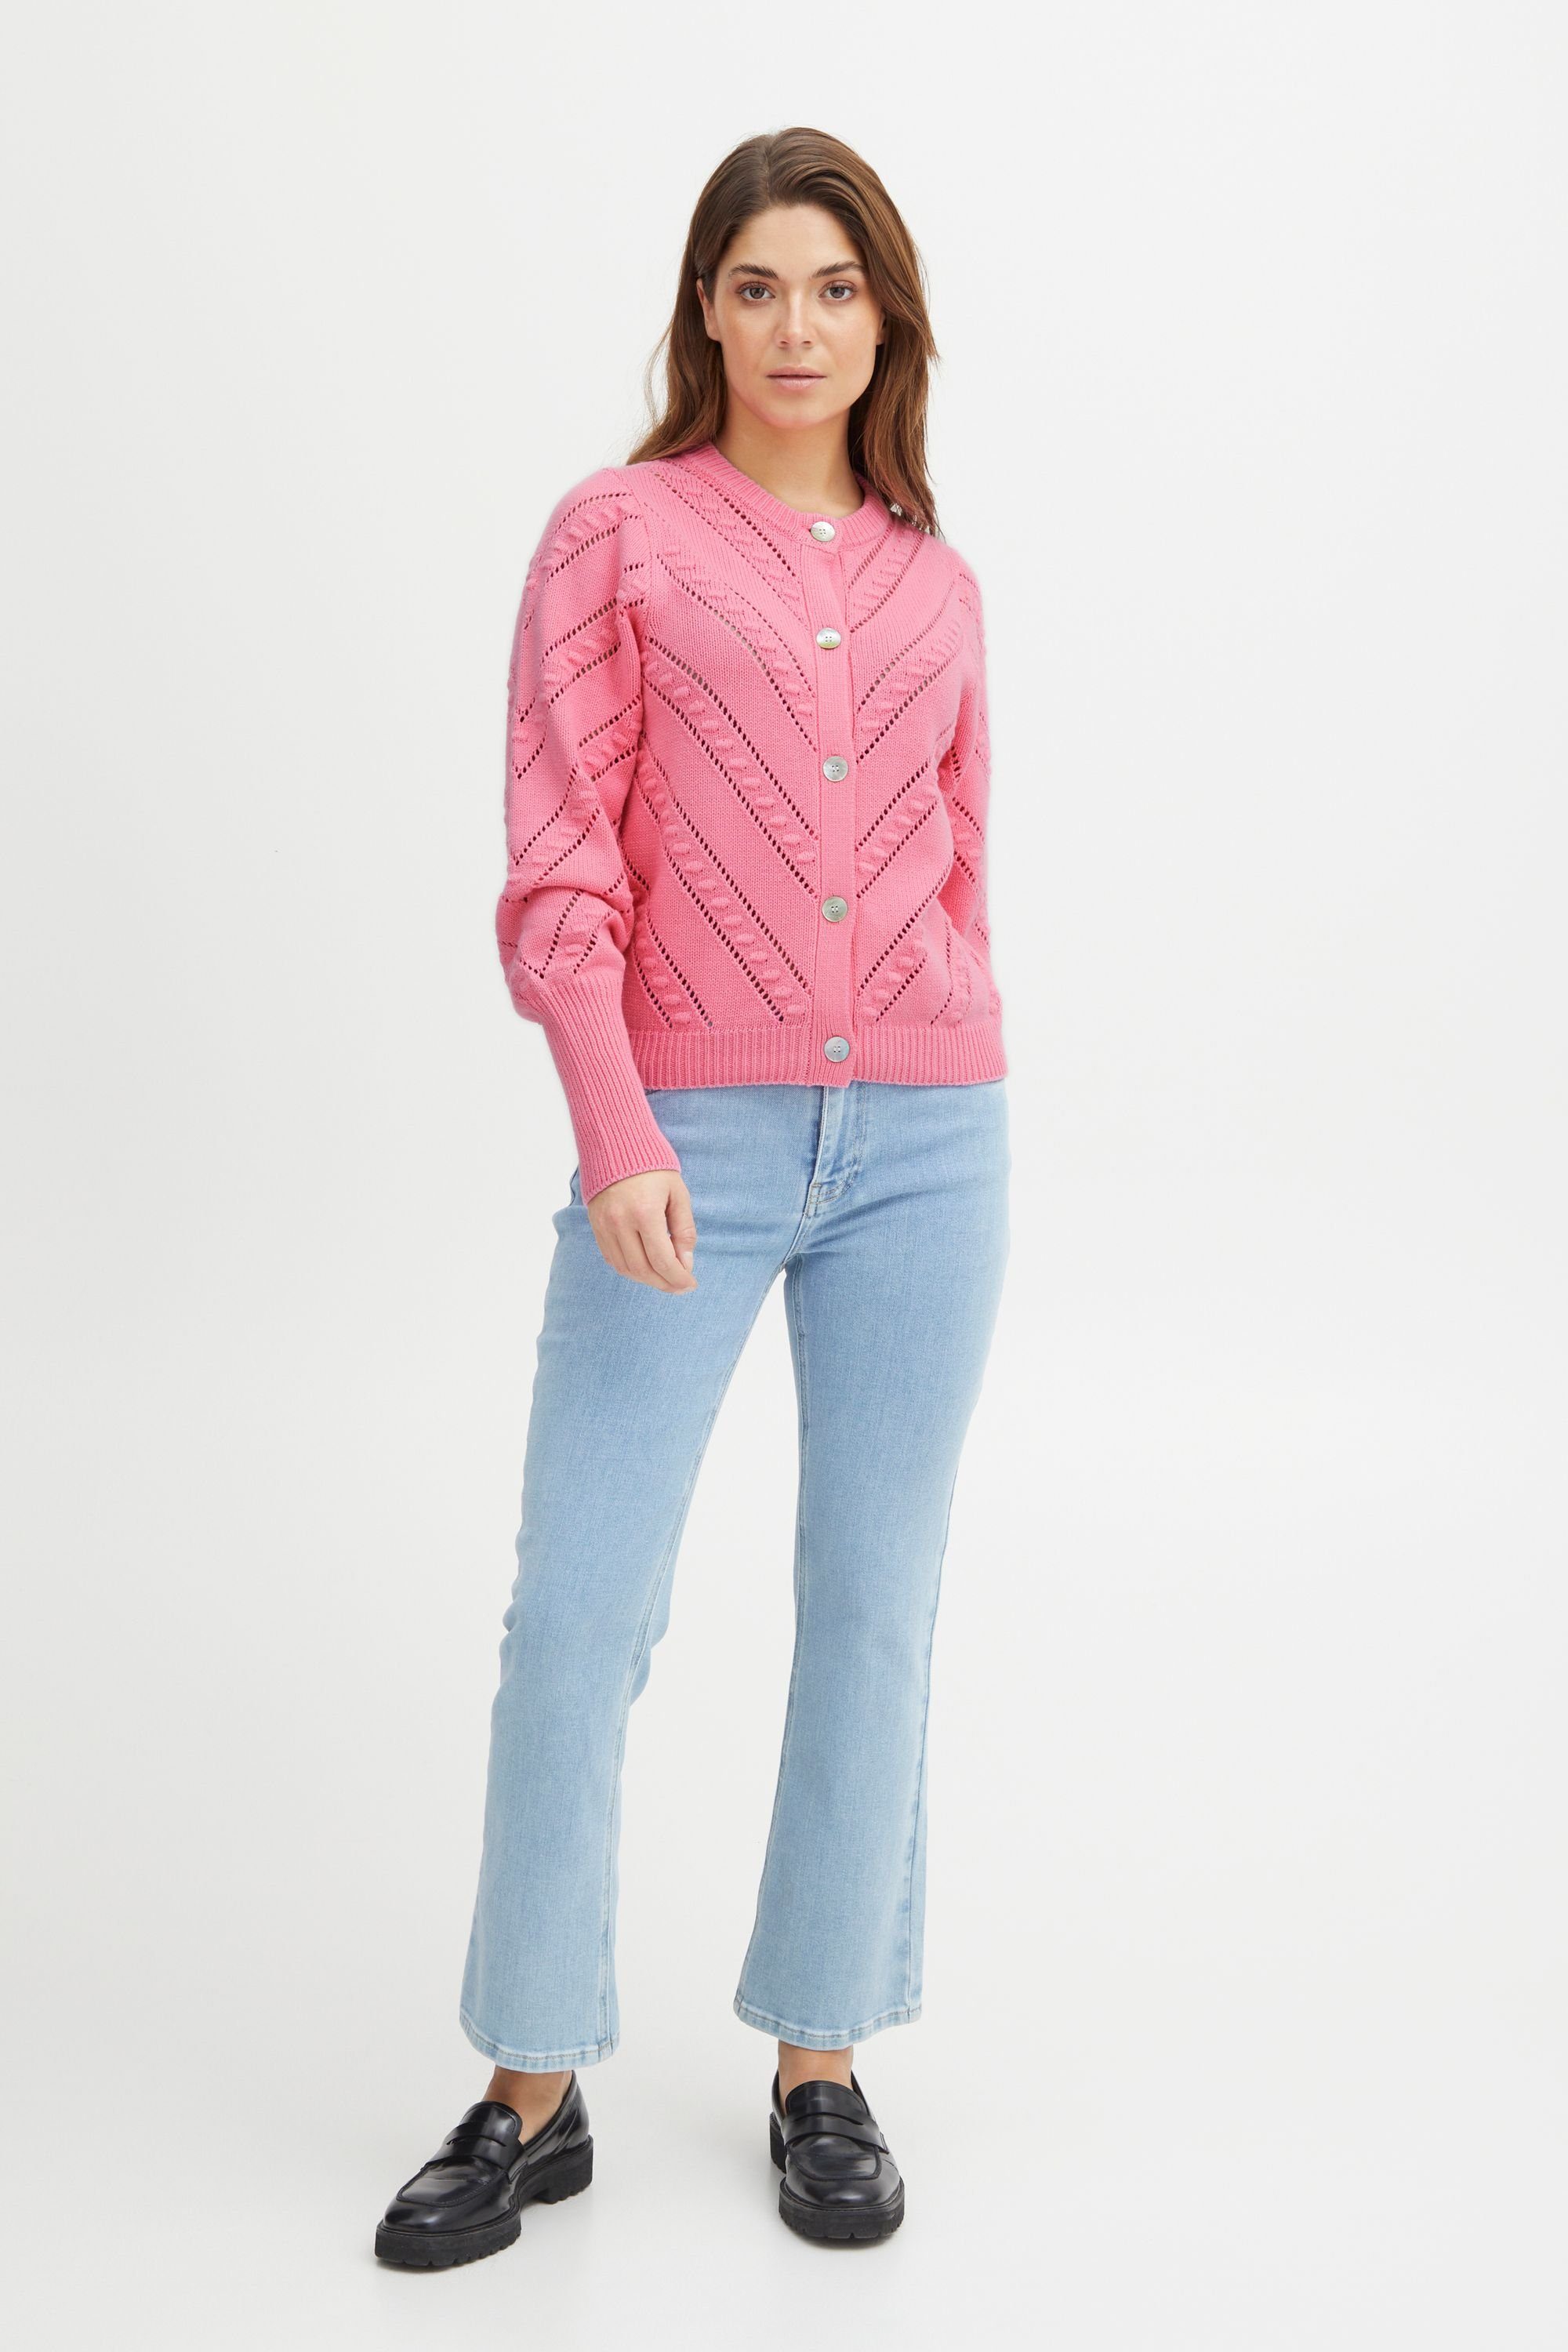 Pulz Jeans Cardigan - Pink Carnation PZAMY (162124) 50207168 Cardigan